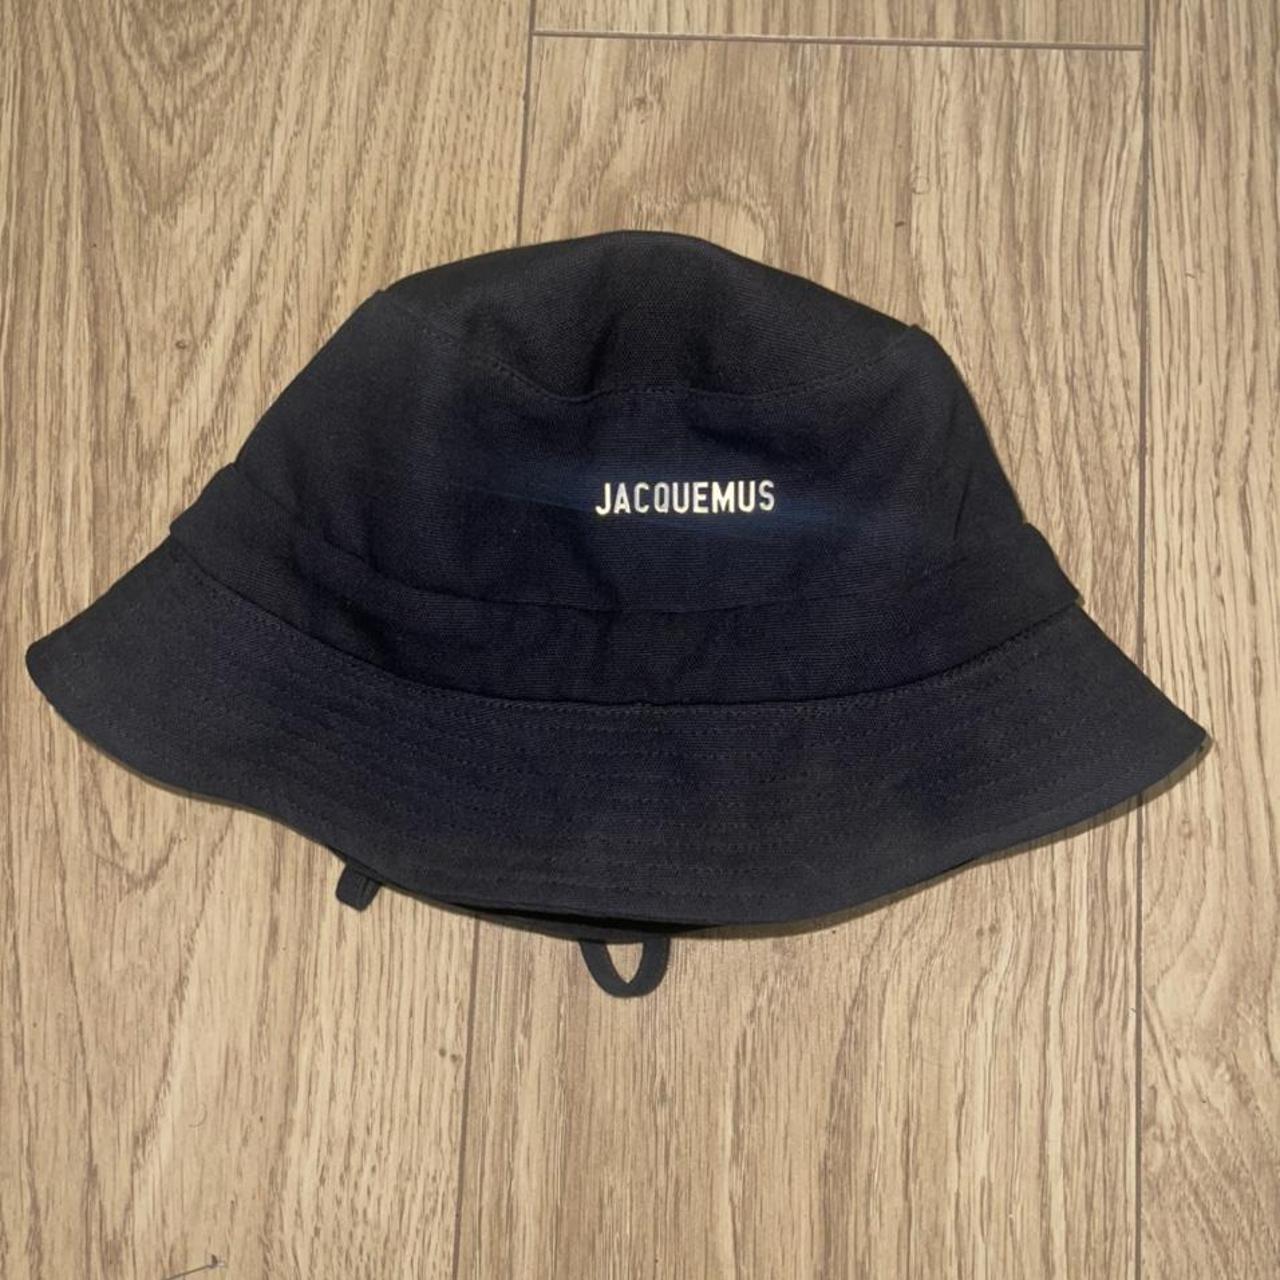 Jacquemus Men's Black and Grey Hat | Depop